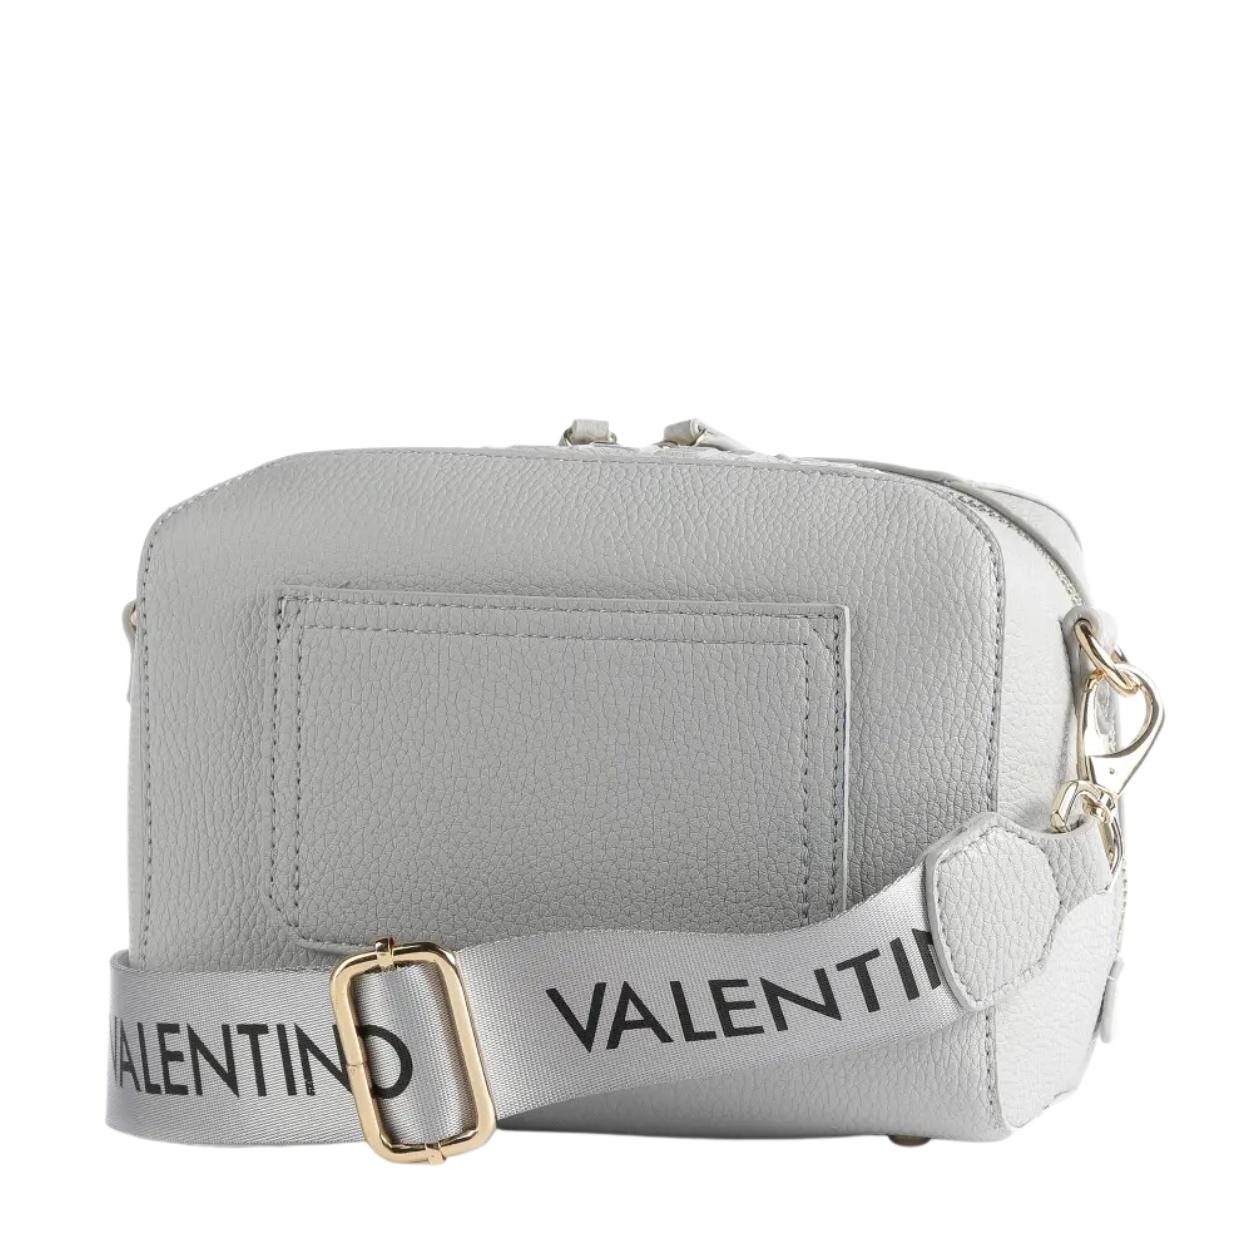 Valentino Bags Pattie Grey Crossbody Bag